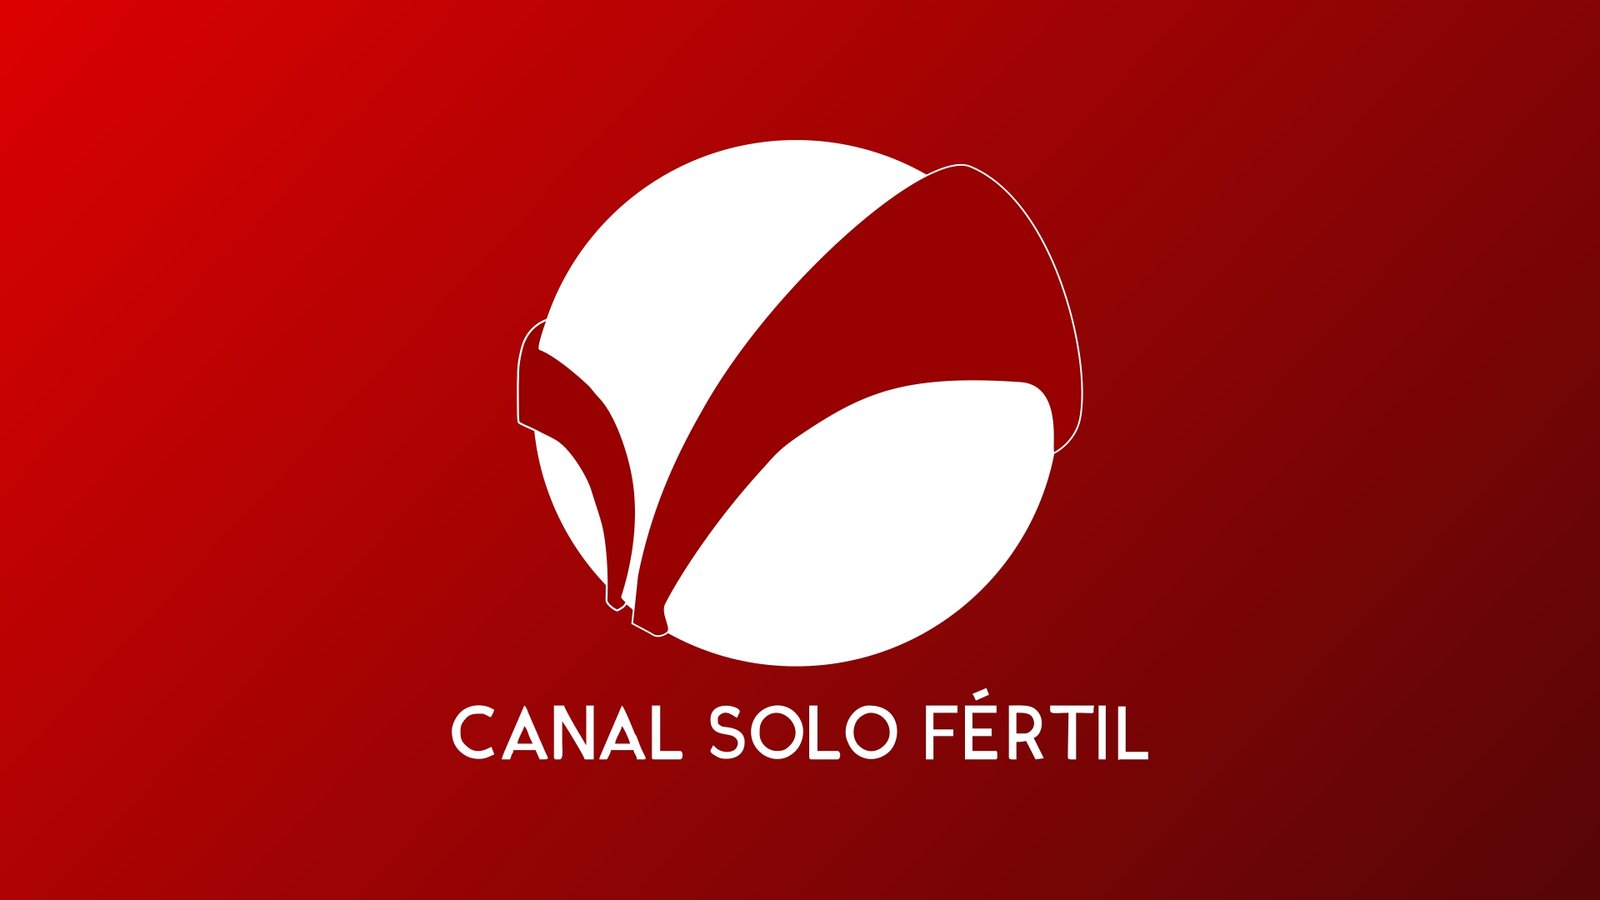 CANAL SOLO FÉRTIL - CANAL 156